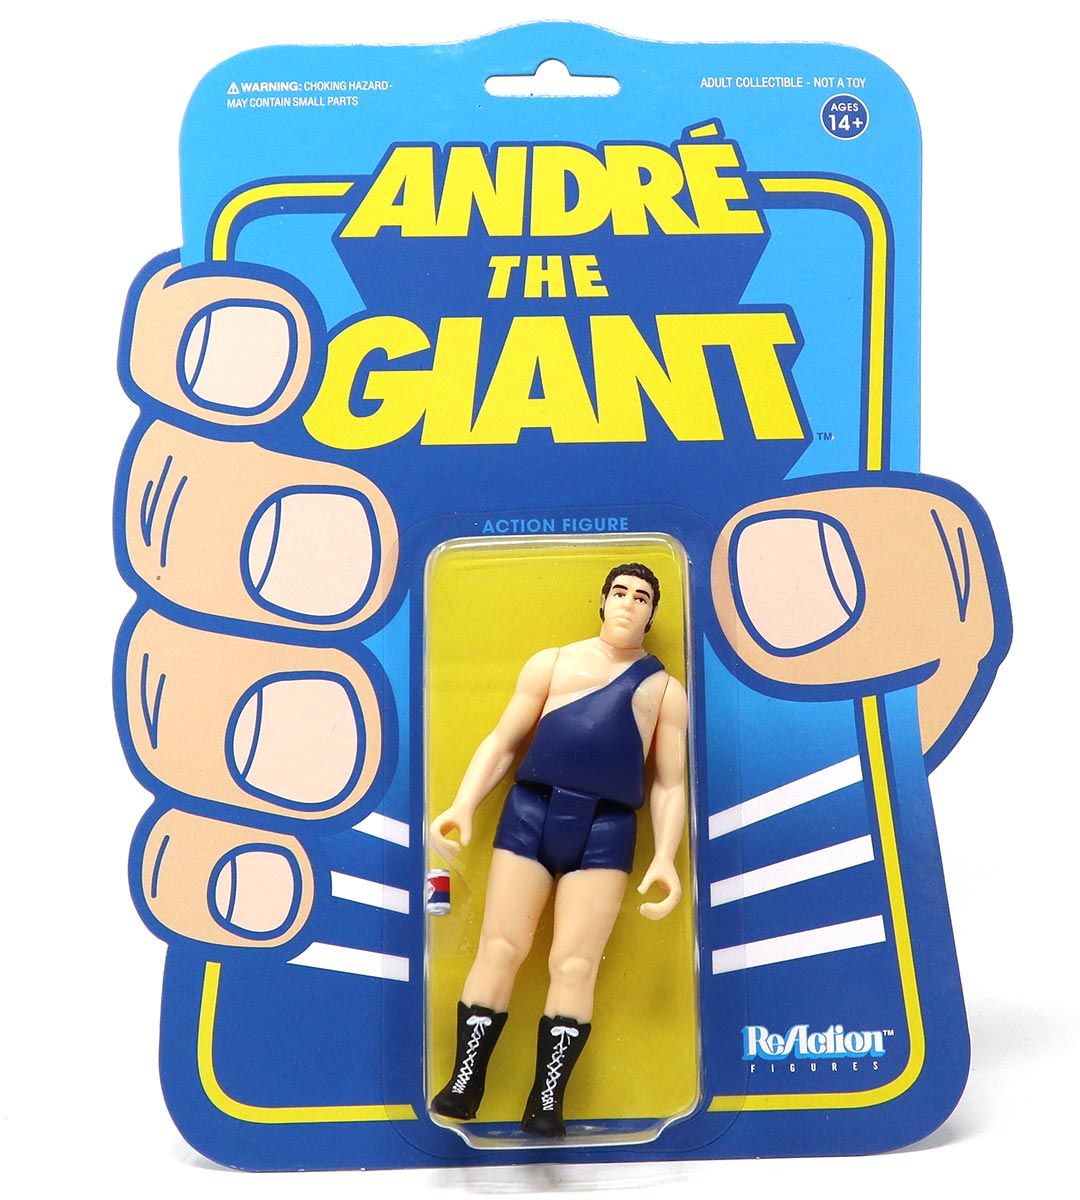 André the Giant - singlet - ReAction figure